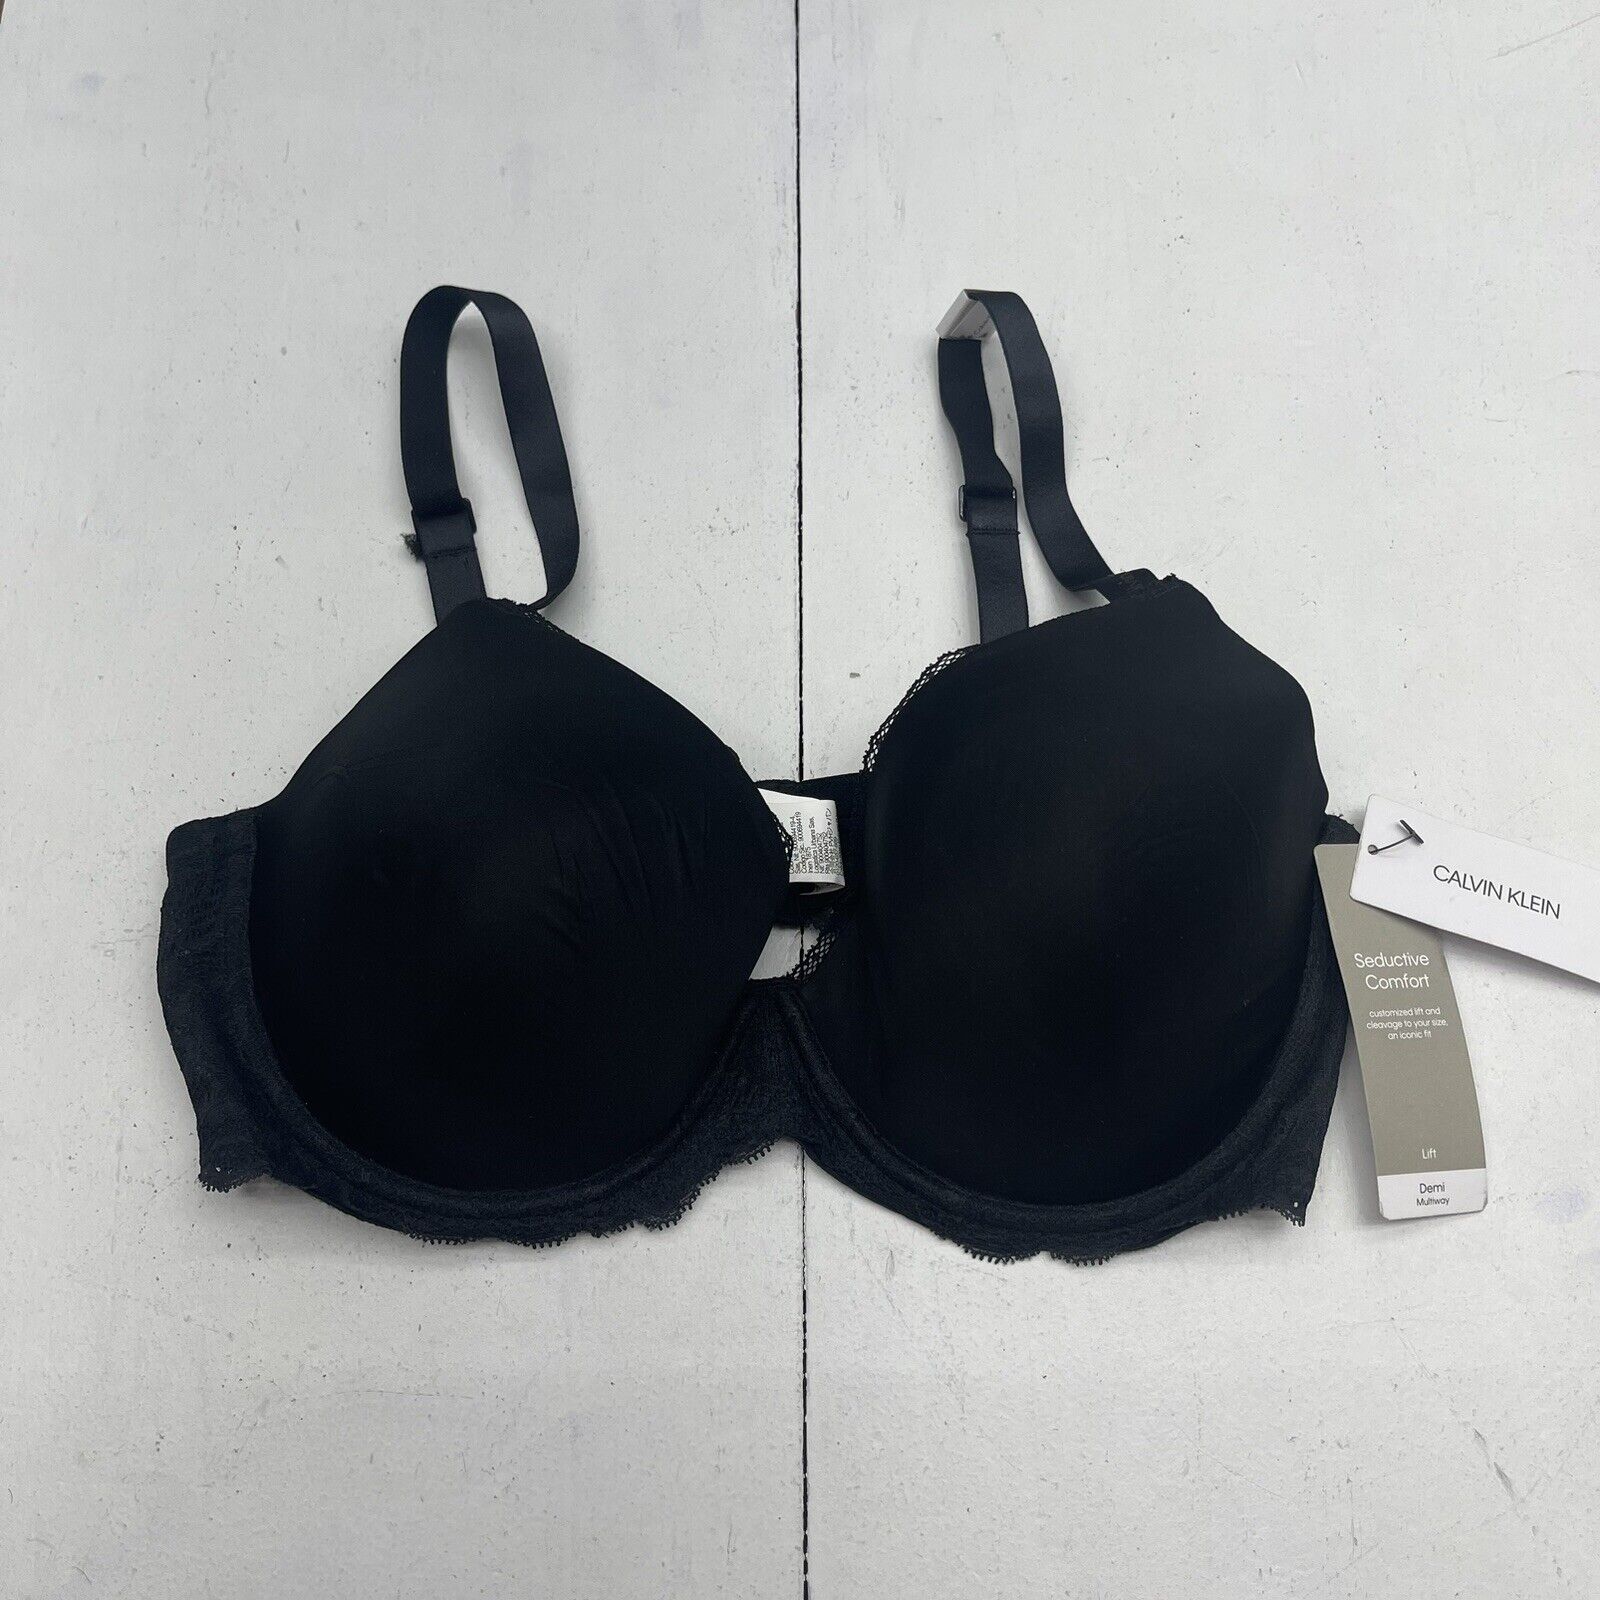 Calvin Klein Women's Seductive Comfort Customized Lift Bra, Black